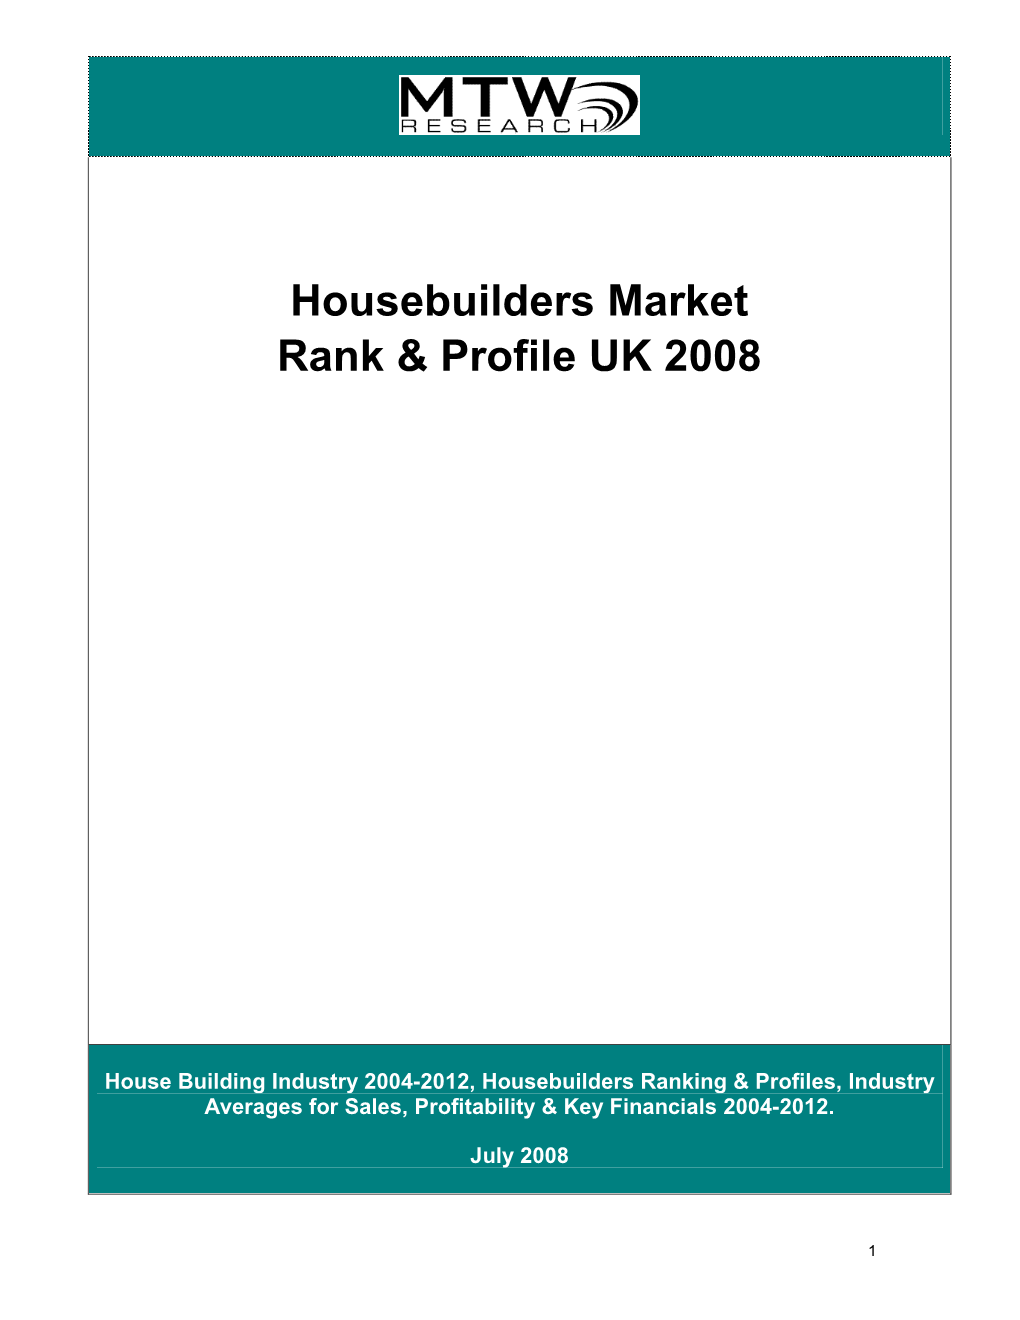 Housebuilders Market Rank & Profile UK 2008